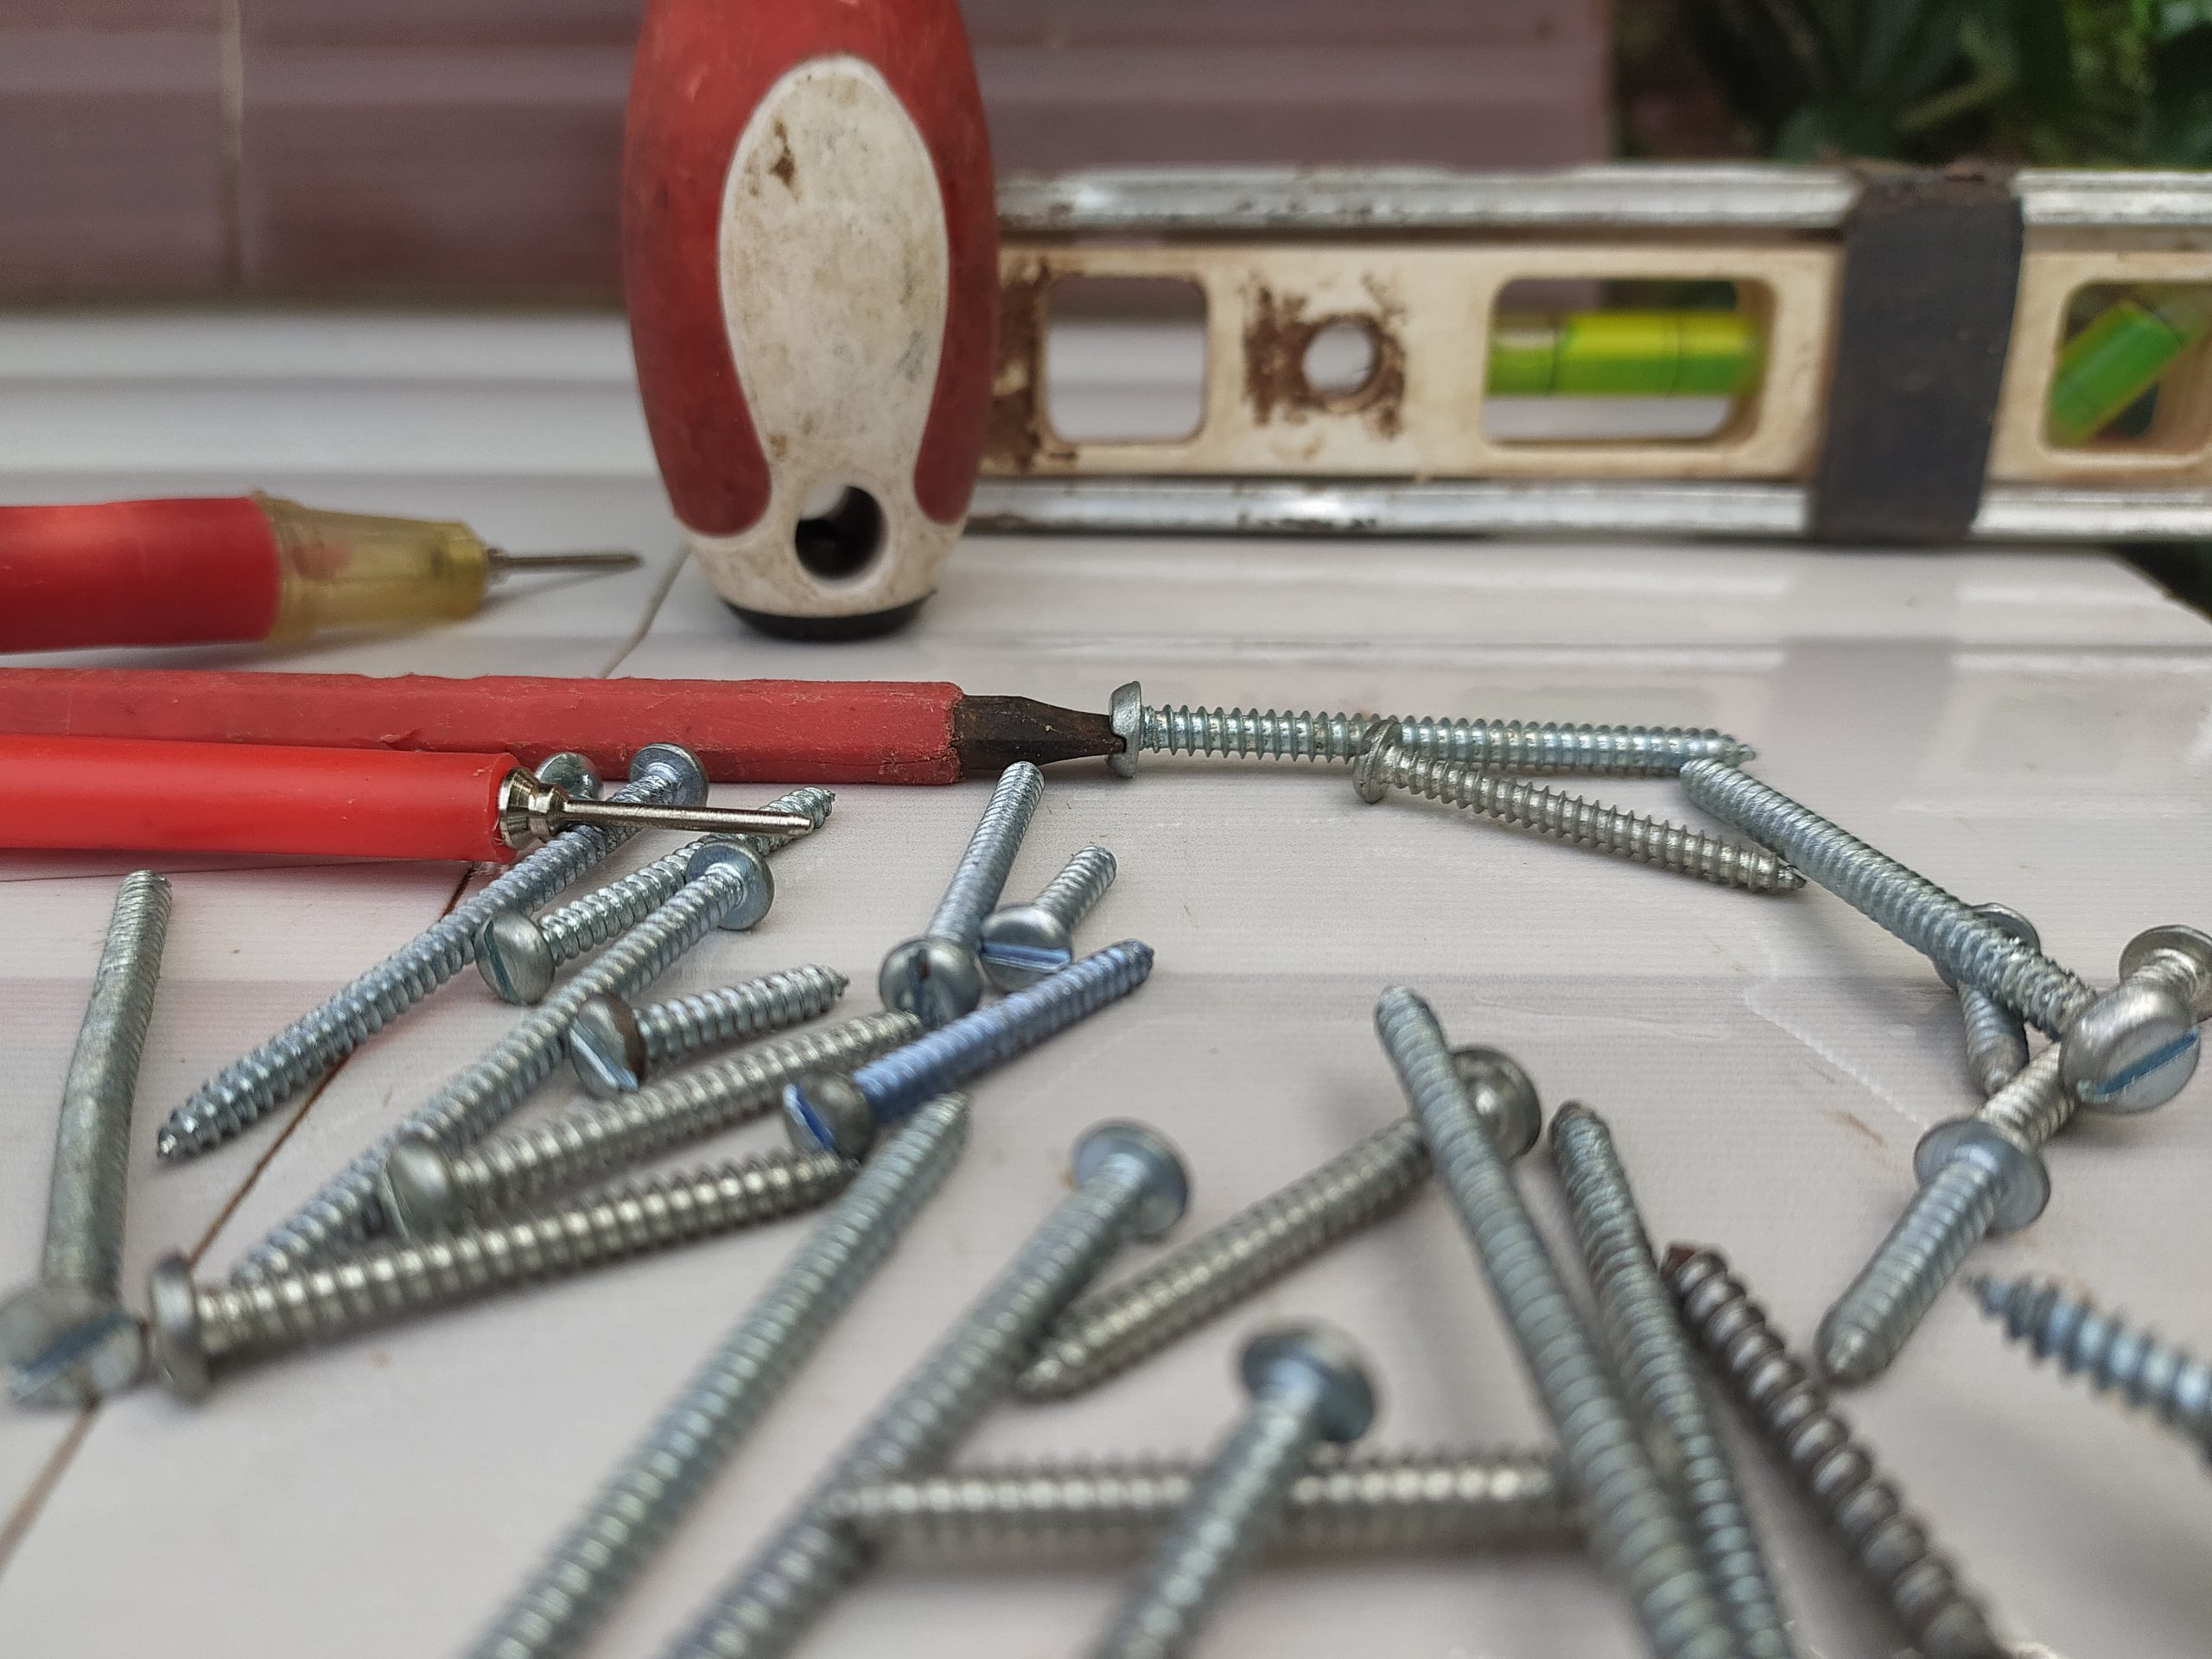 Screws and tools